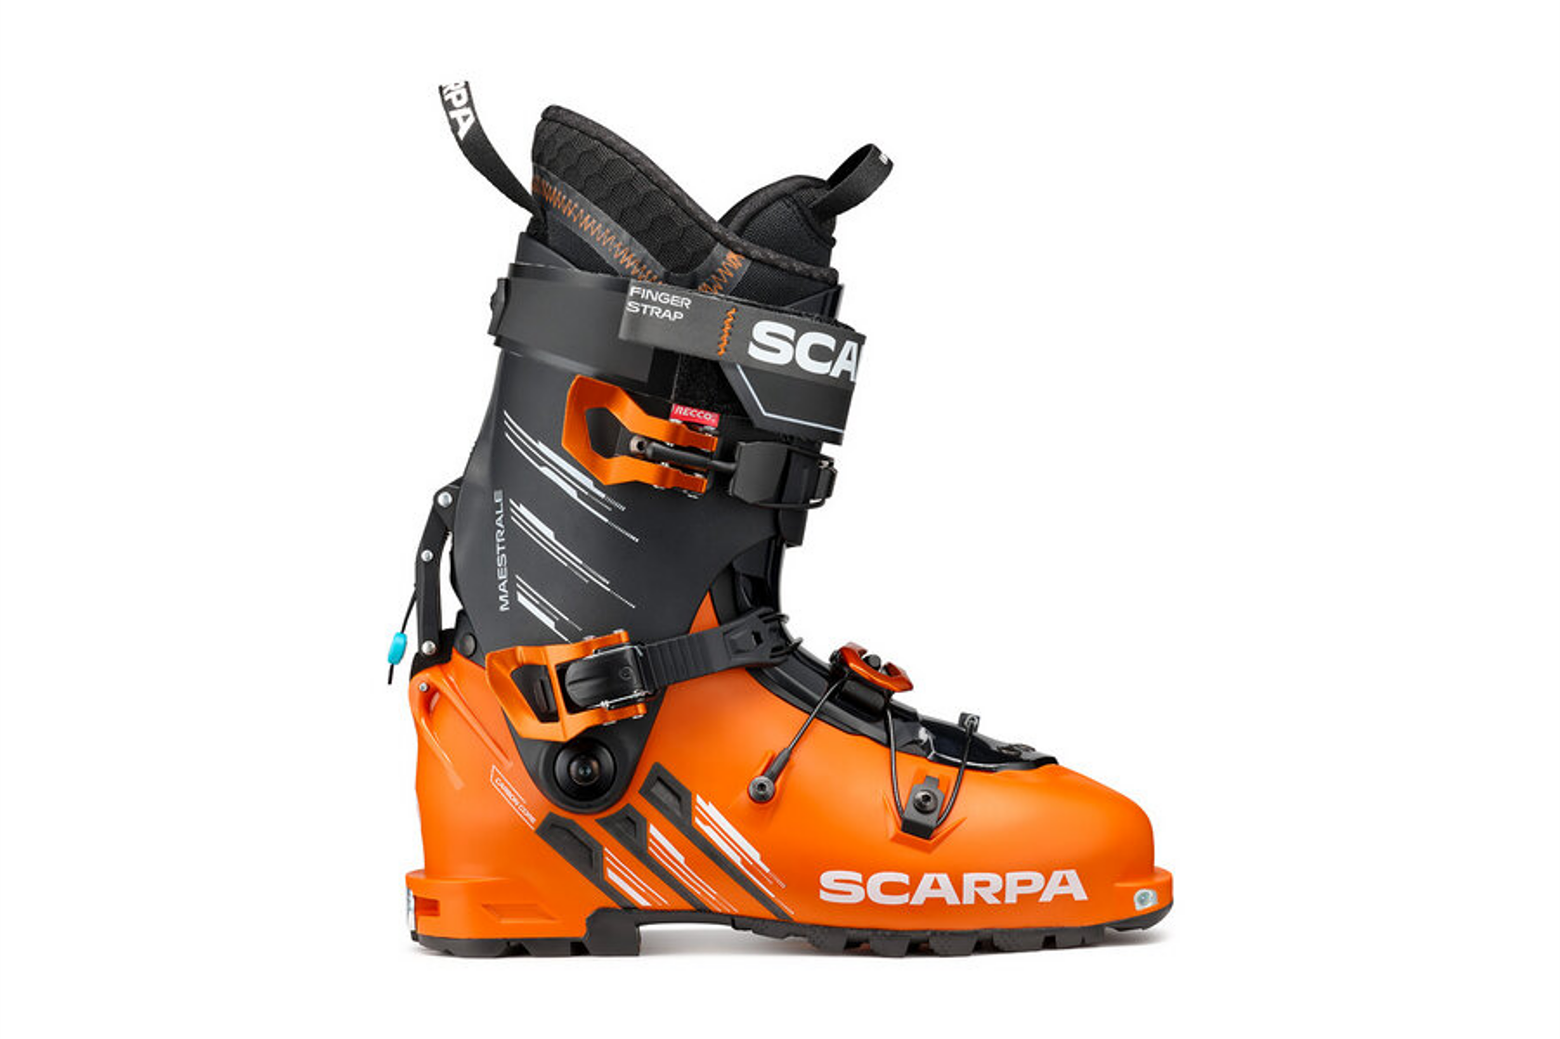 High performance ski boot from Scarpa using Pebax materials